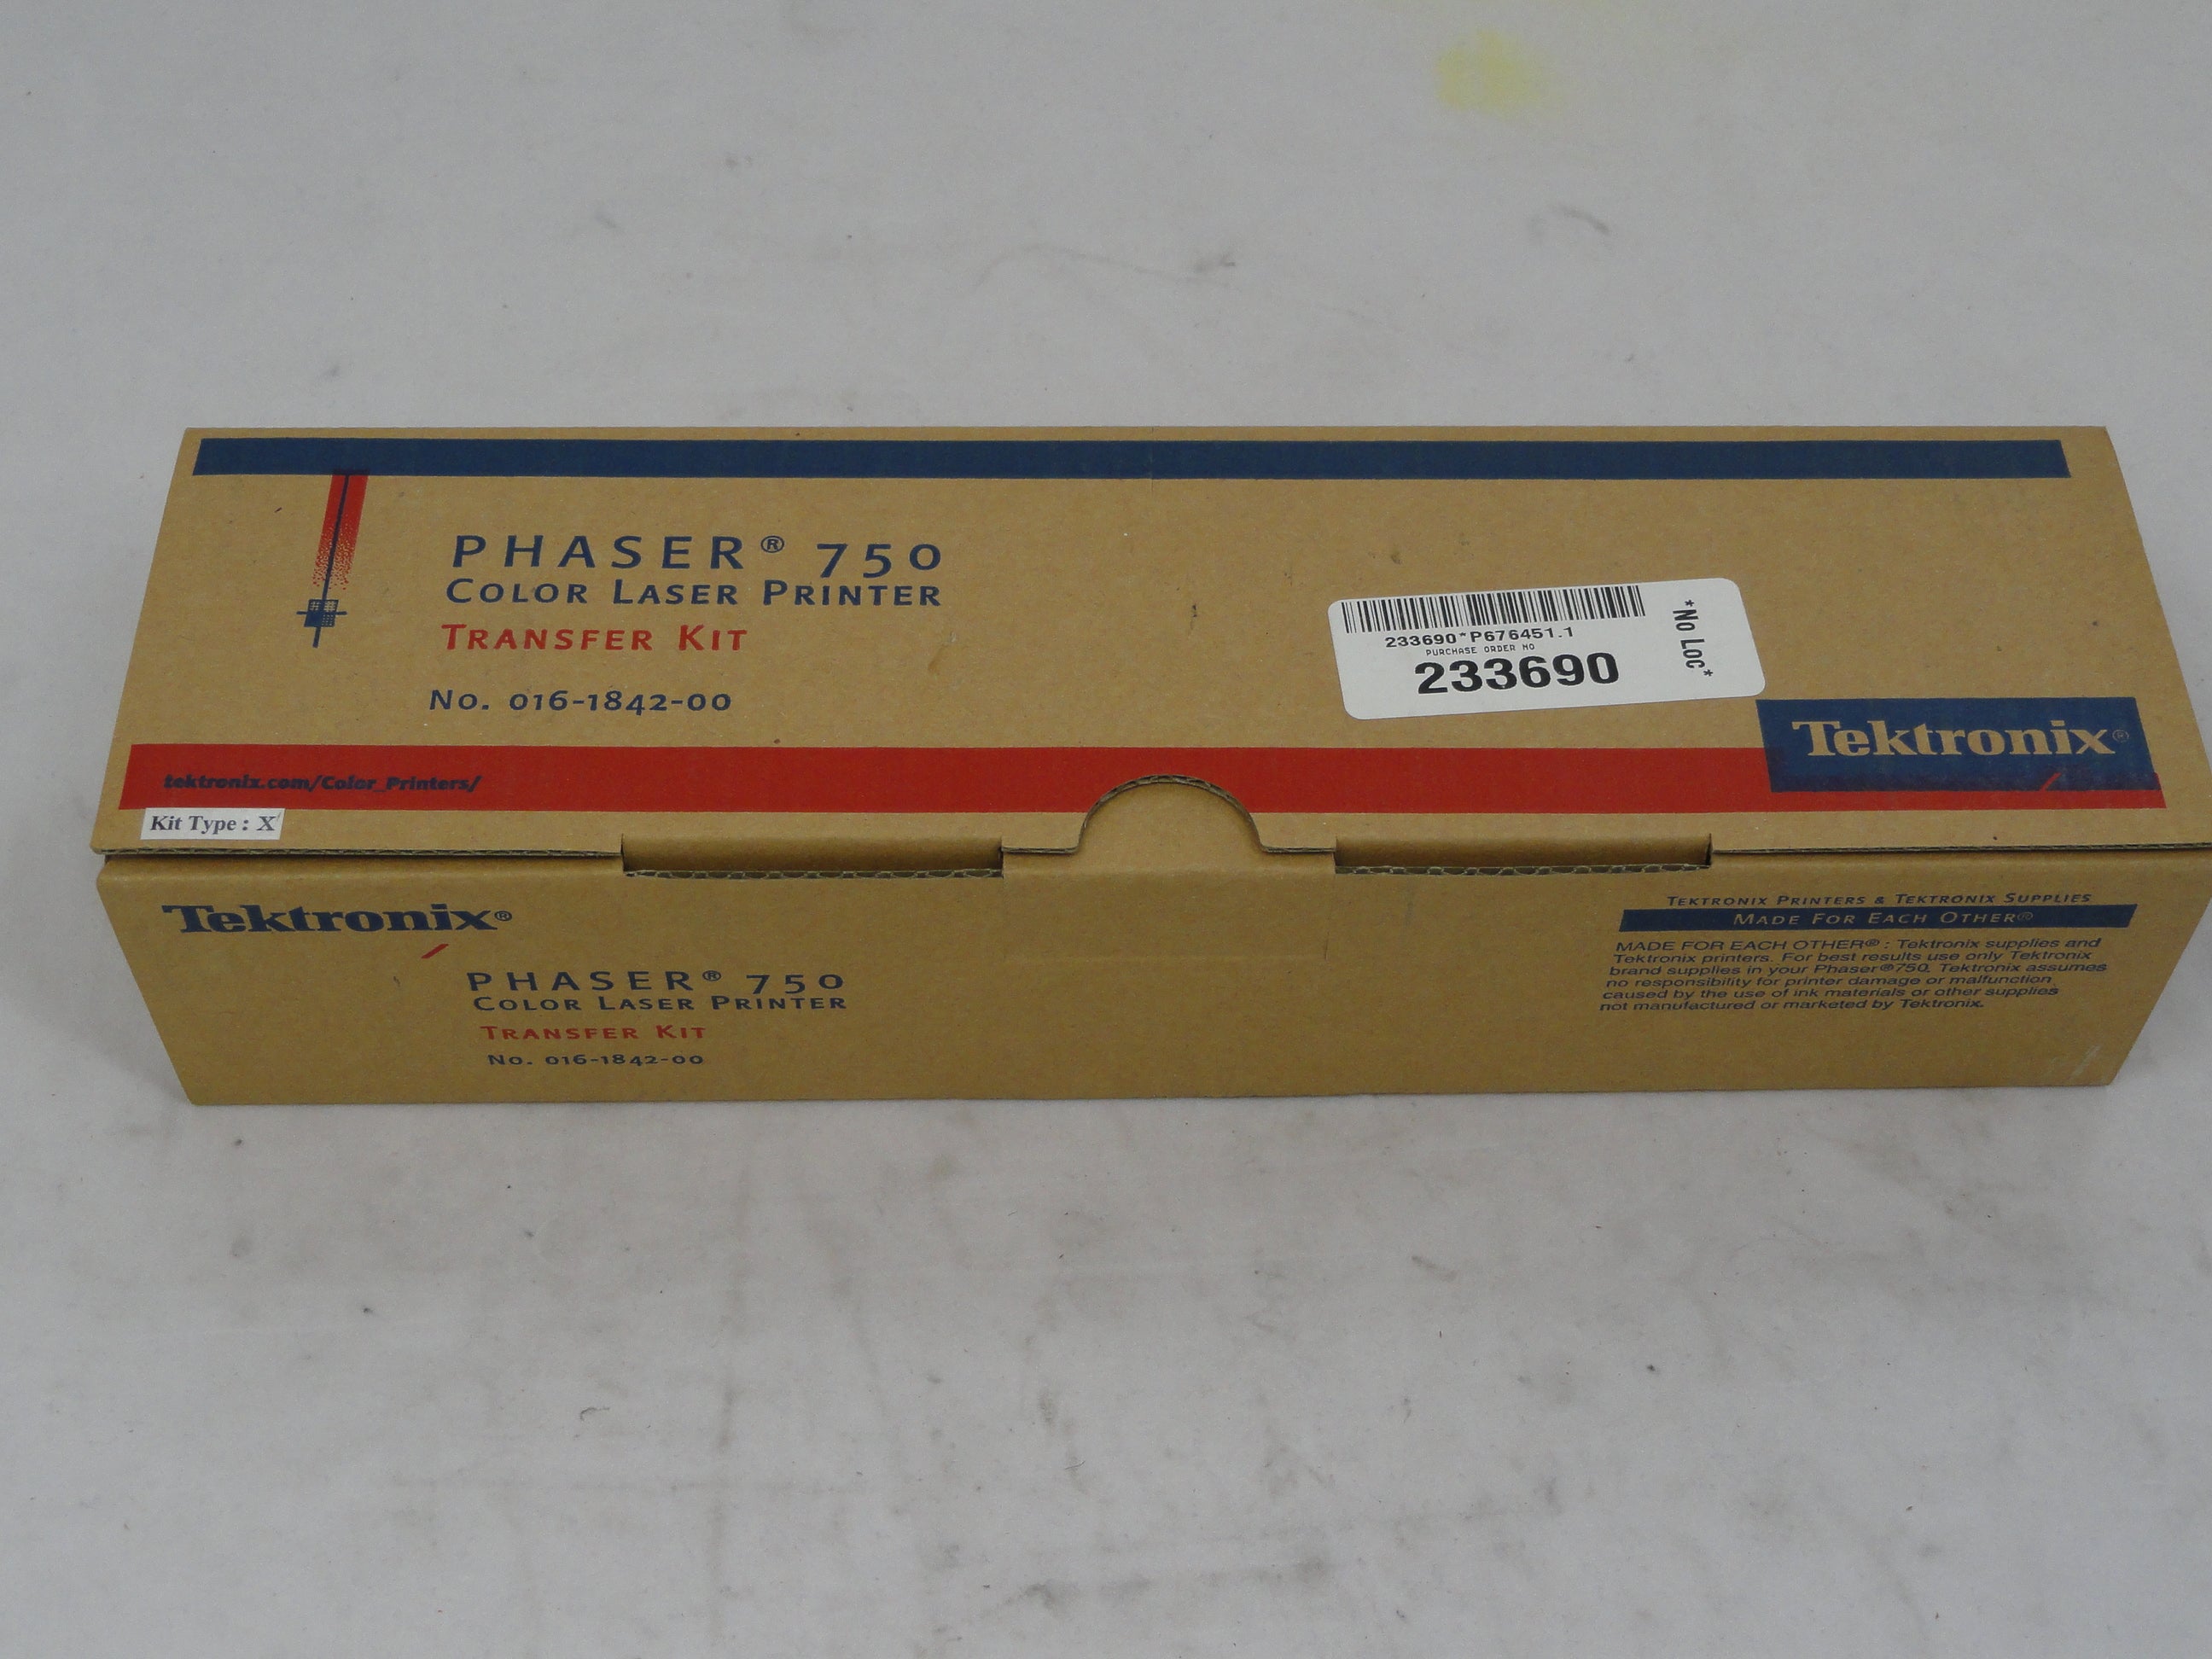 PR10528_016-1842-00_Tektronix Color Laser Printing Transfer Kit 750 - Image6